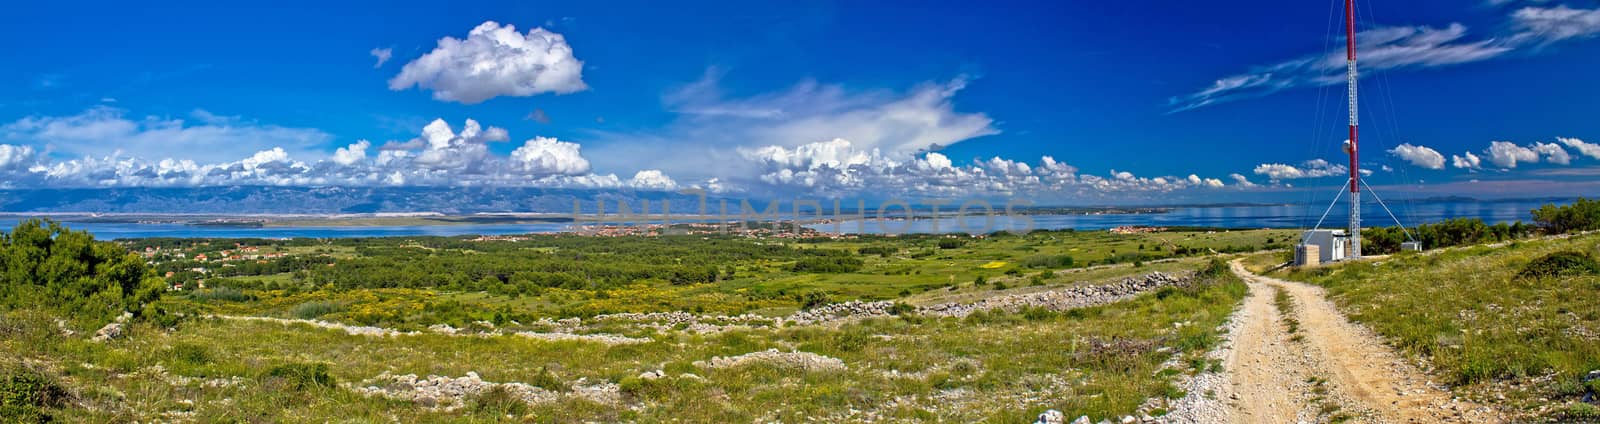 Island of Vir panoramic view by xbrchx